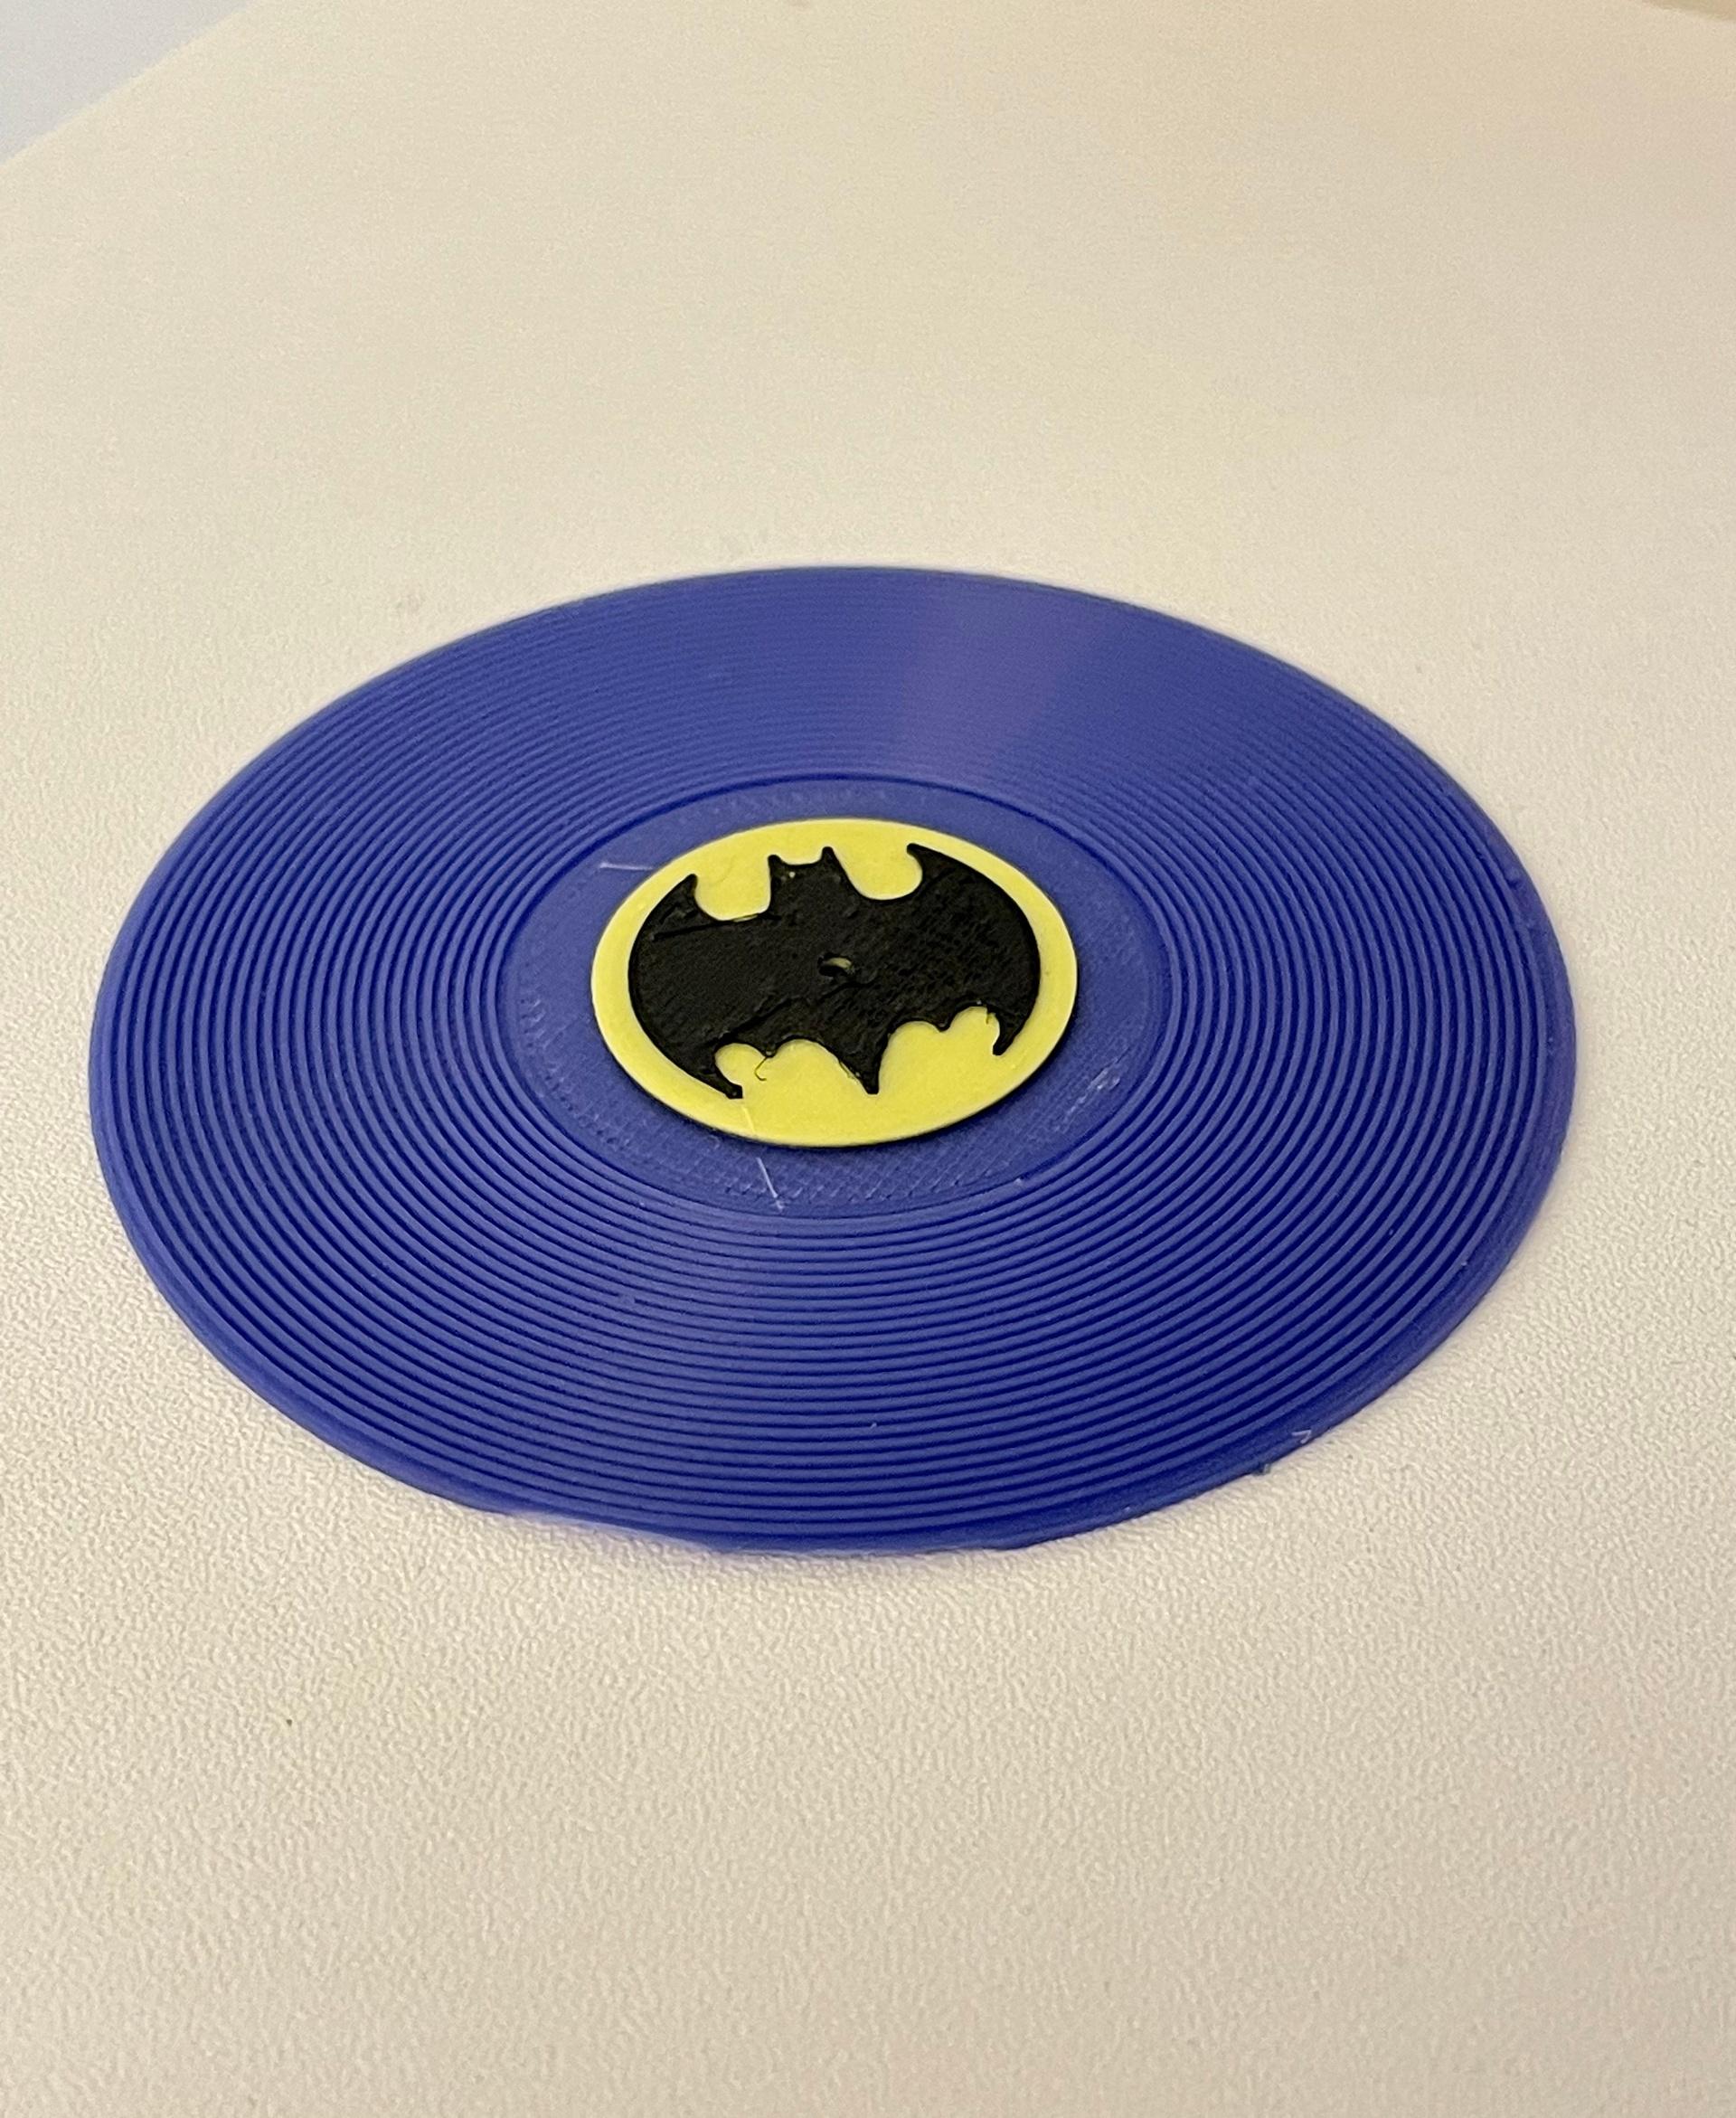 Batman Mini Record - Batman Mini Record, navy blue, yellow and black PLA. - 3d model